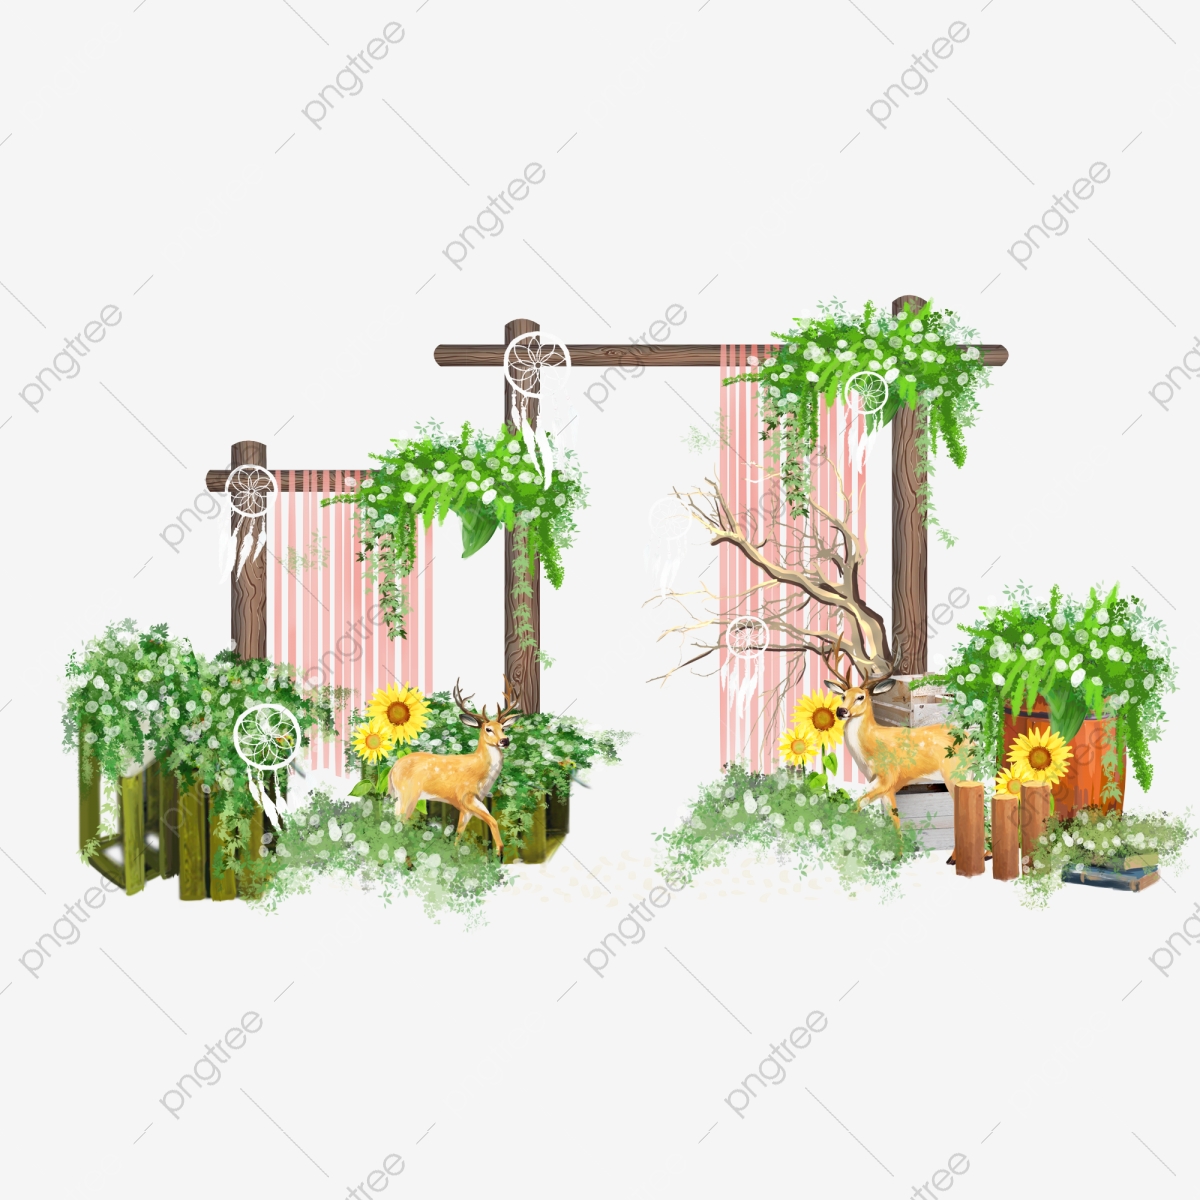 Gardener clipart simple garden. Creative plant gardening element